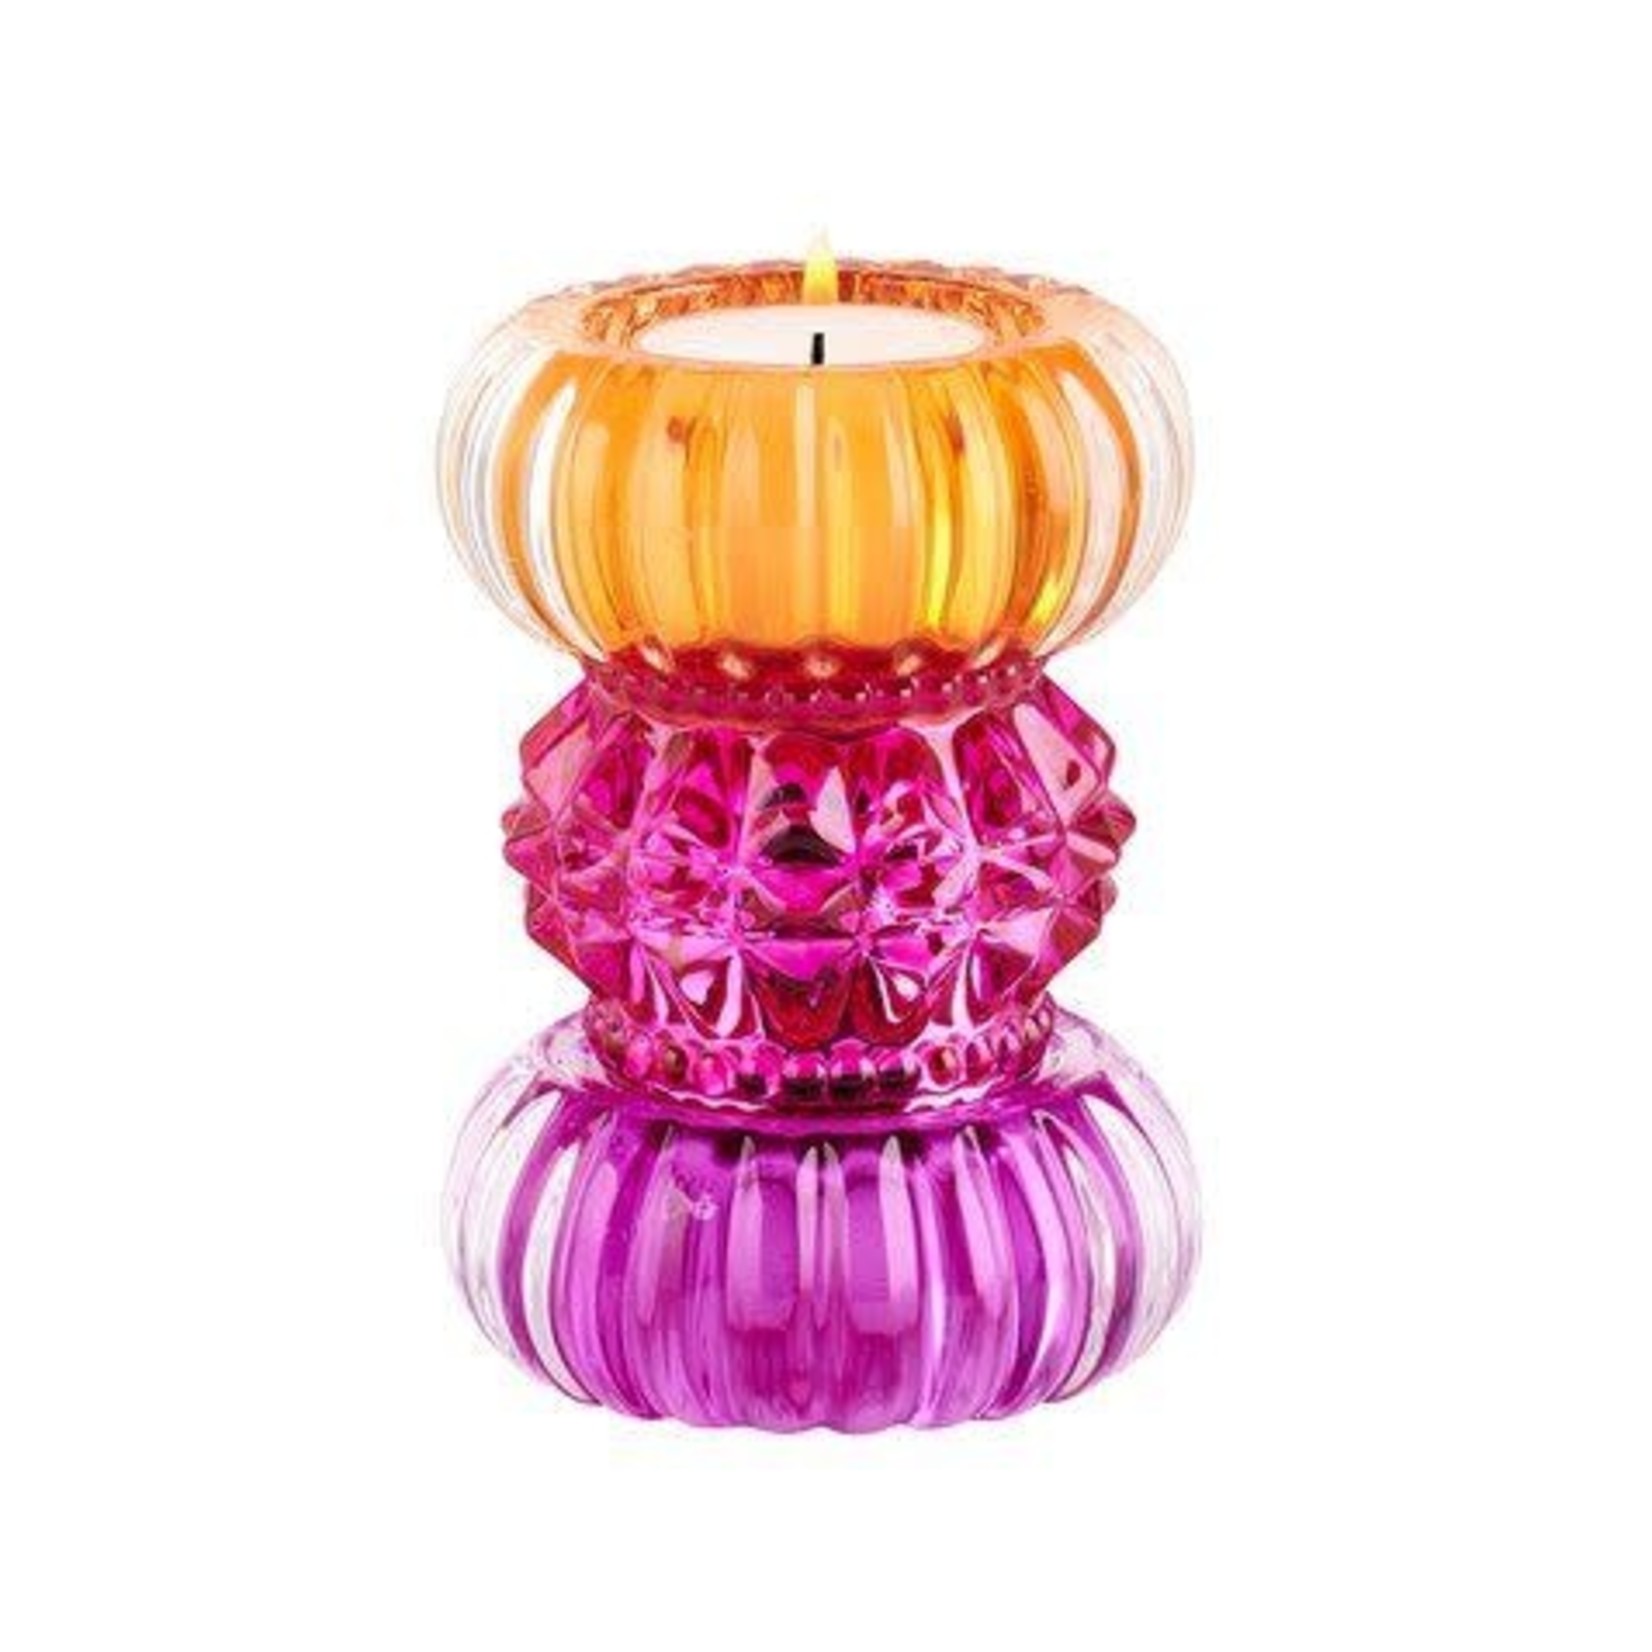 Giftcompany Sari, tea light holder h11,5cm, round, orange/pink/purple, sprayed